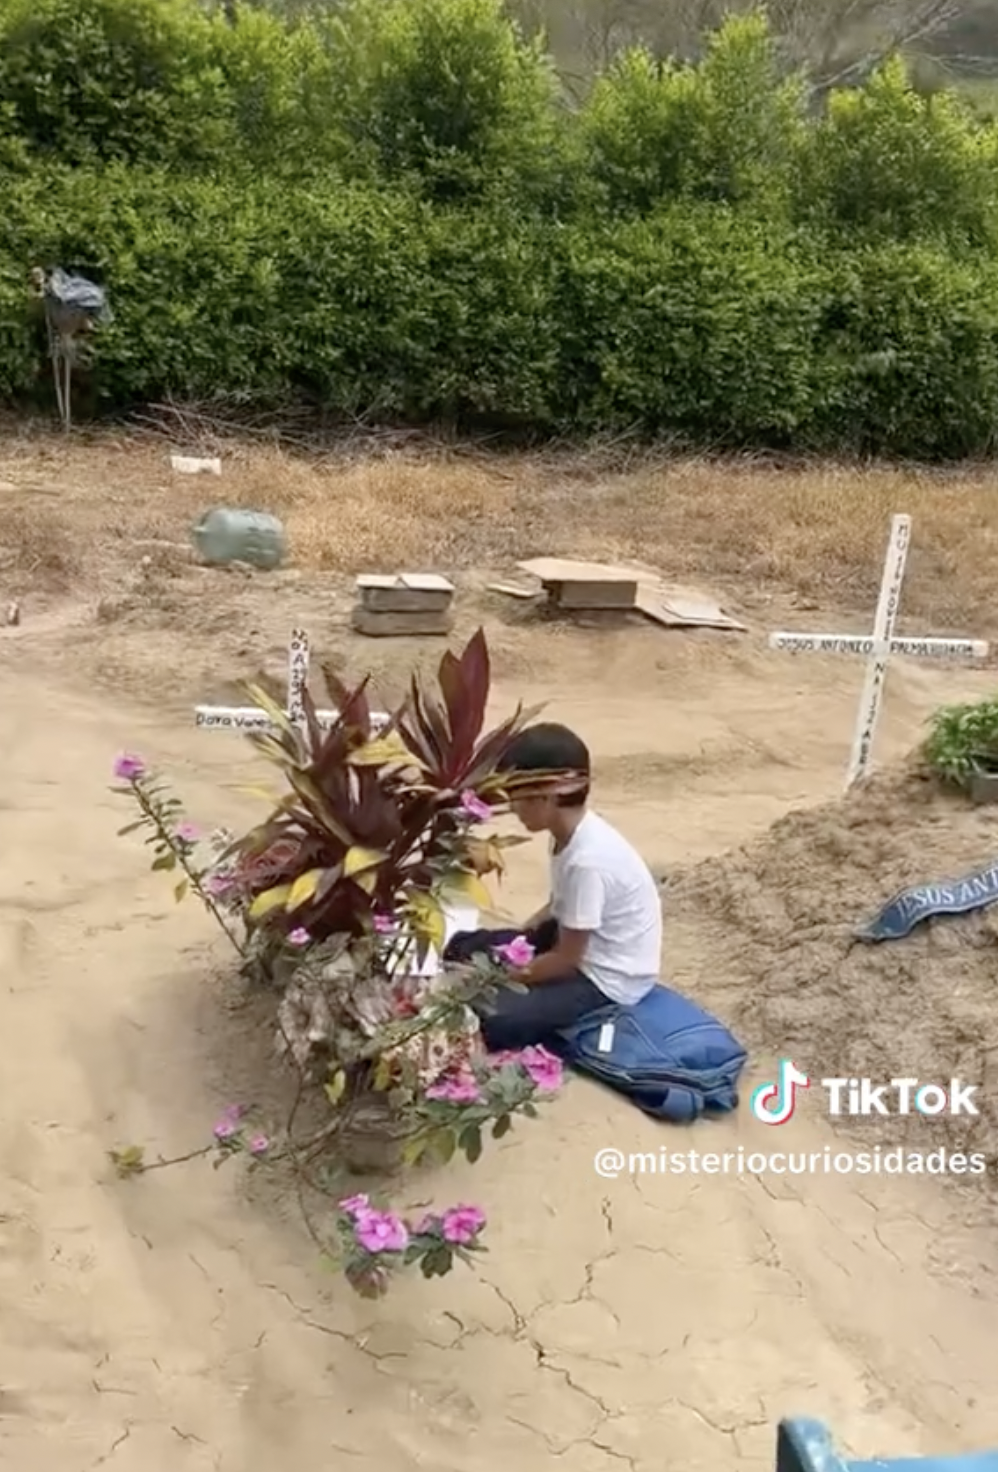 Kike sur la tombe de sa mère. | Source : tiktok.com/@misteriocuriosidades